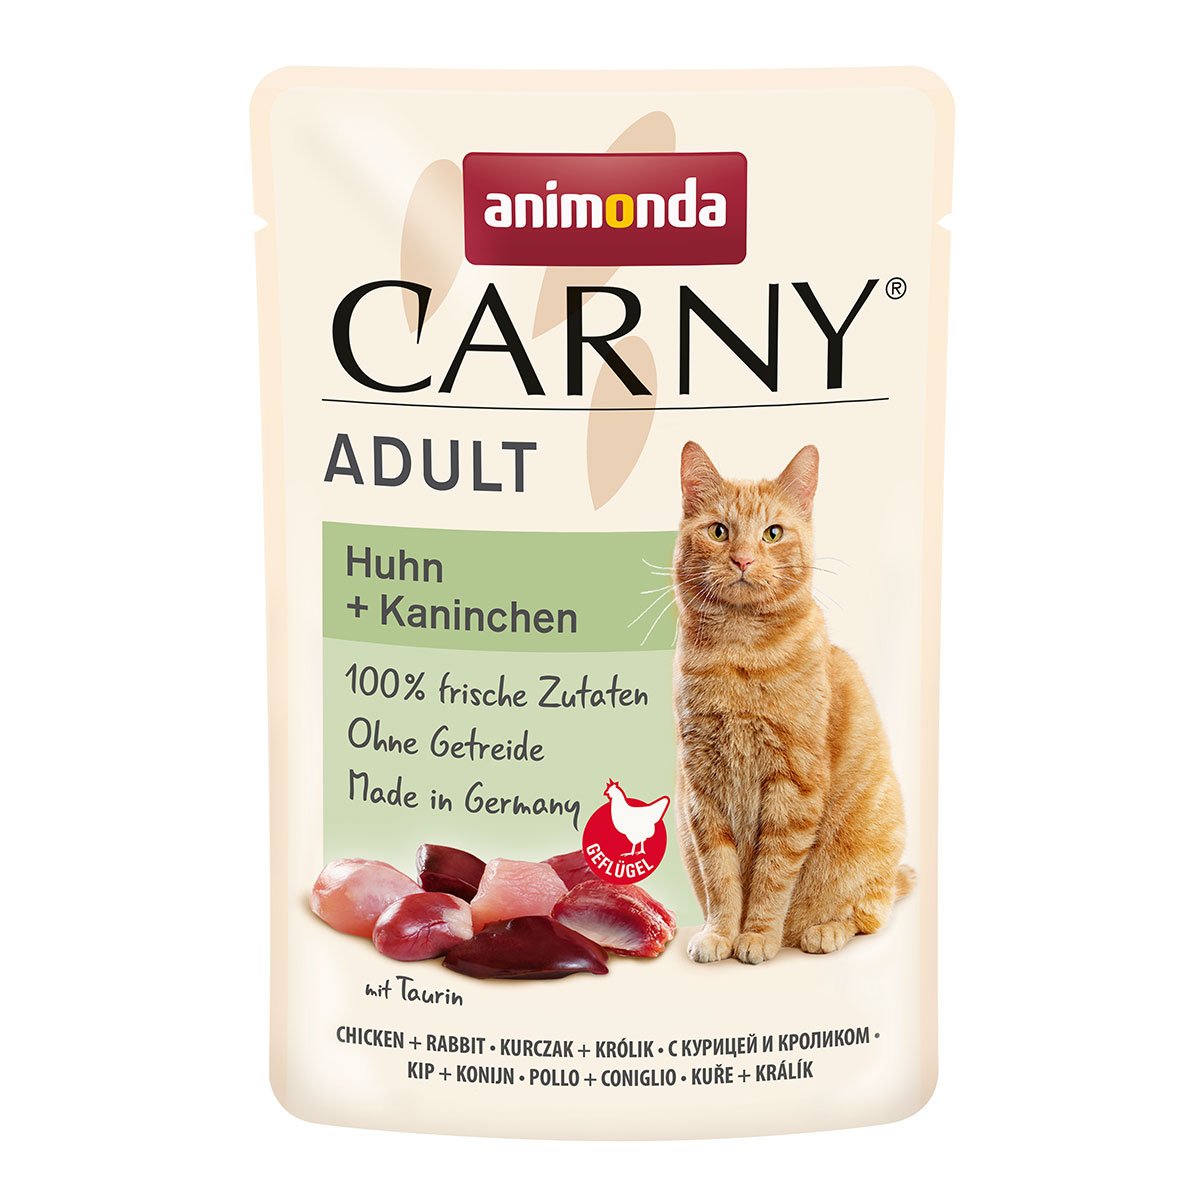 animonda Carny Adult Huhn + Kaninchen 12x85g von animonda Carny